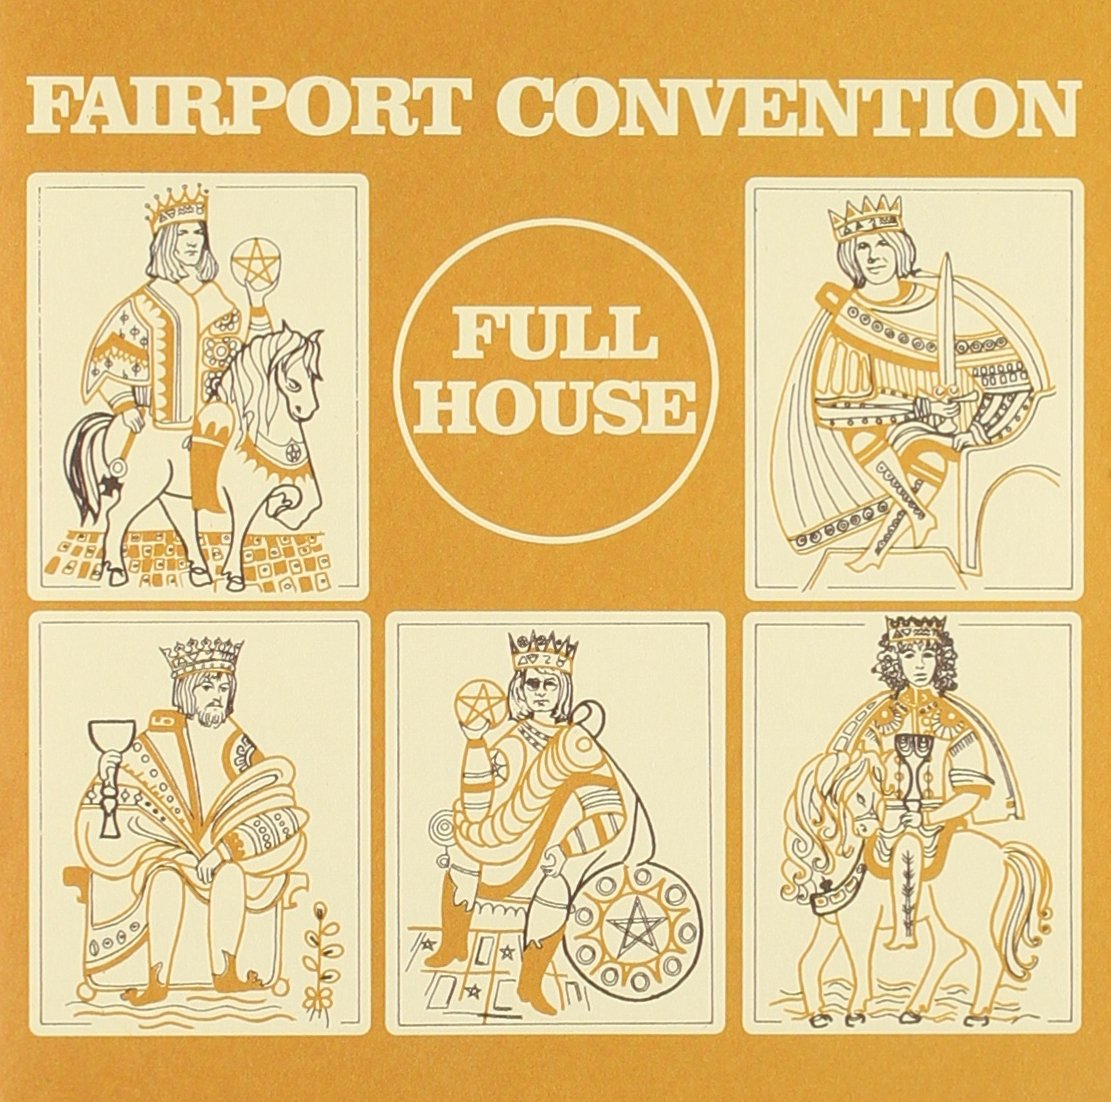 full house fairport convention rar